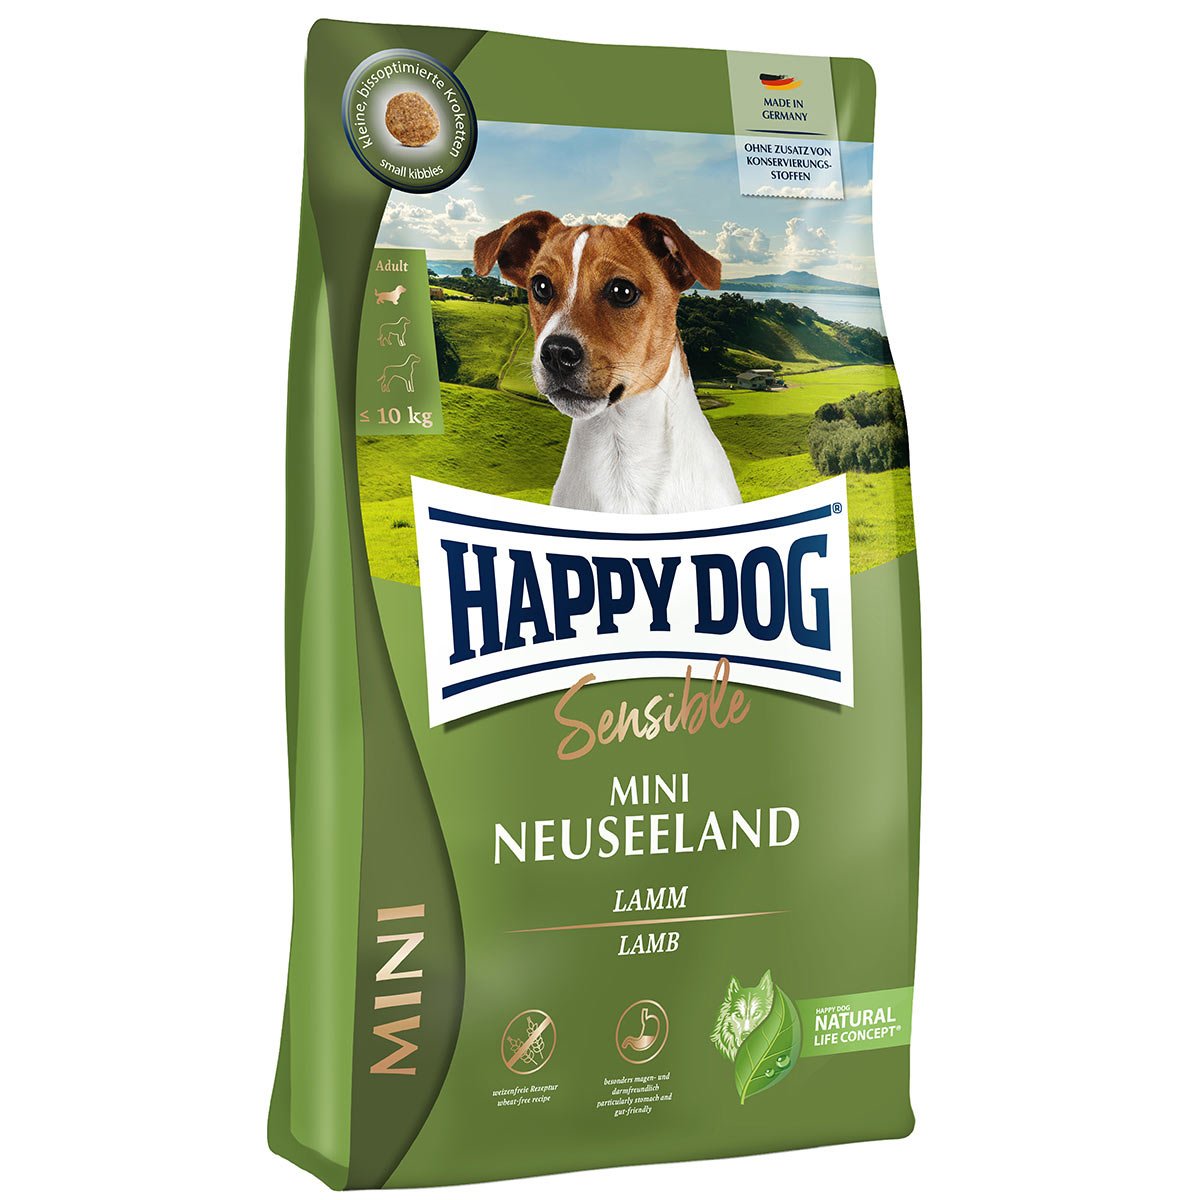 Happy Dog Sensible Mini Neuseeland 800g